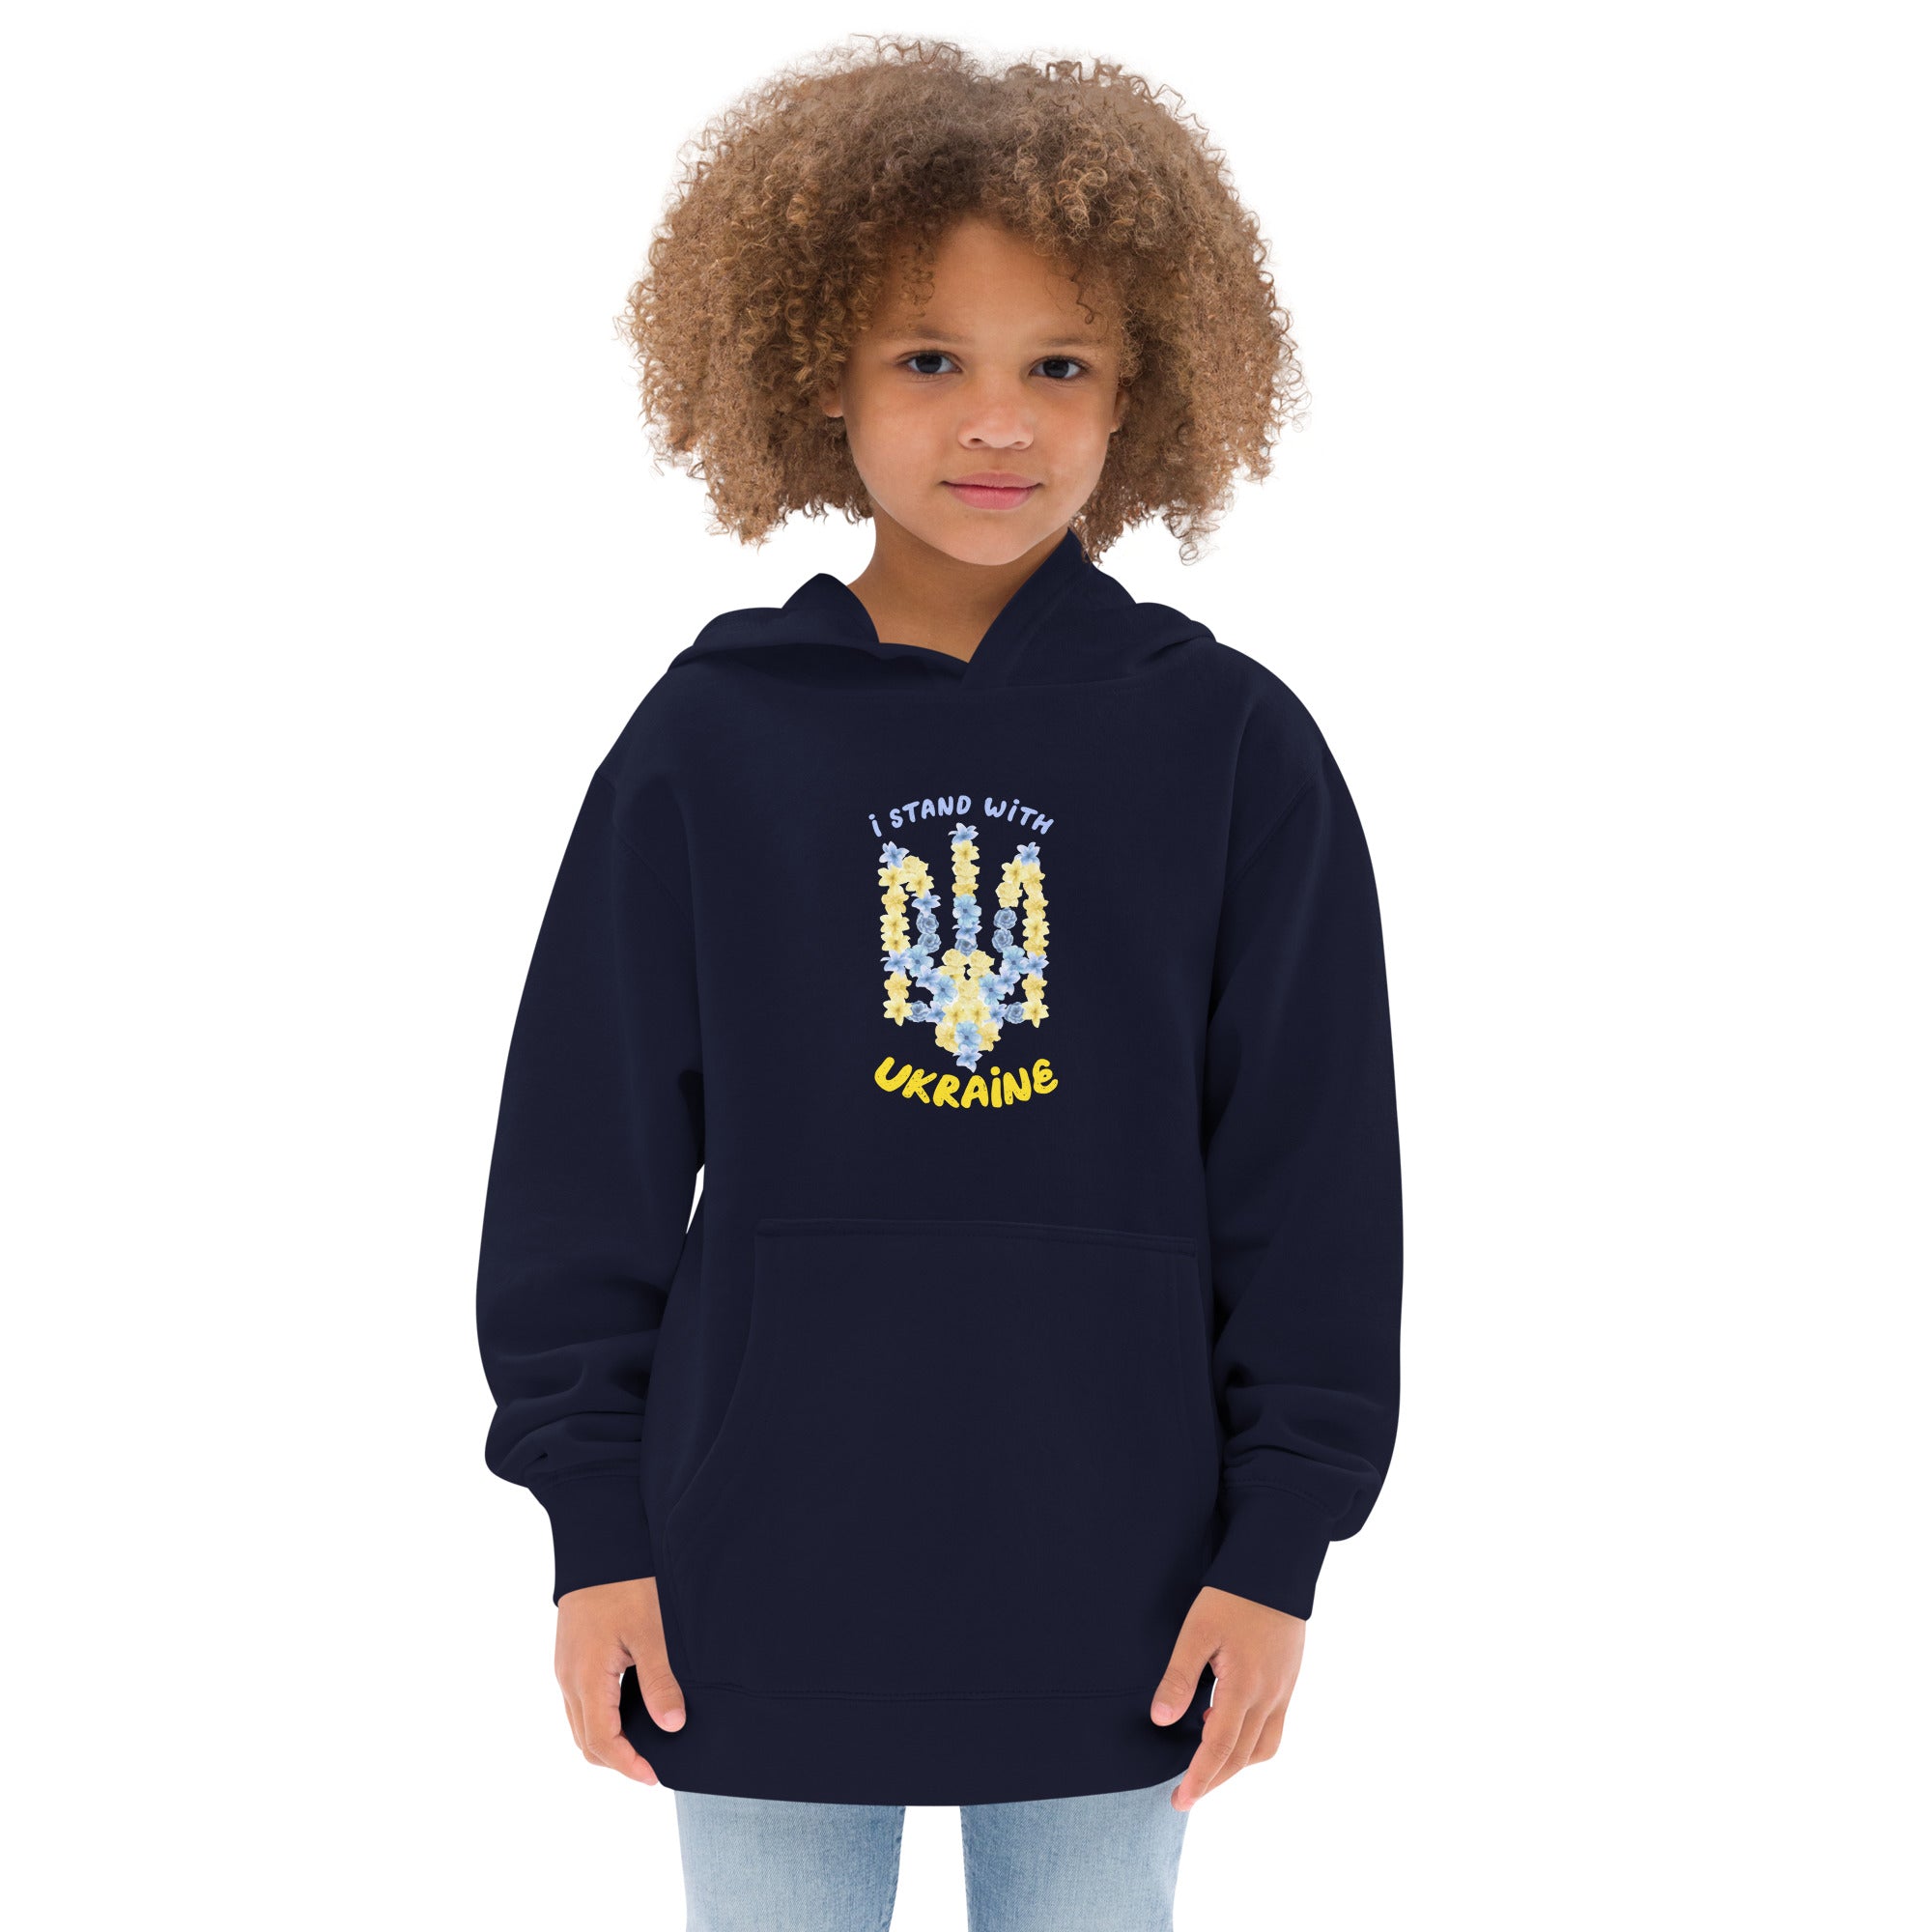 Kids fleece hoodie "I stand with Ukraine"